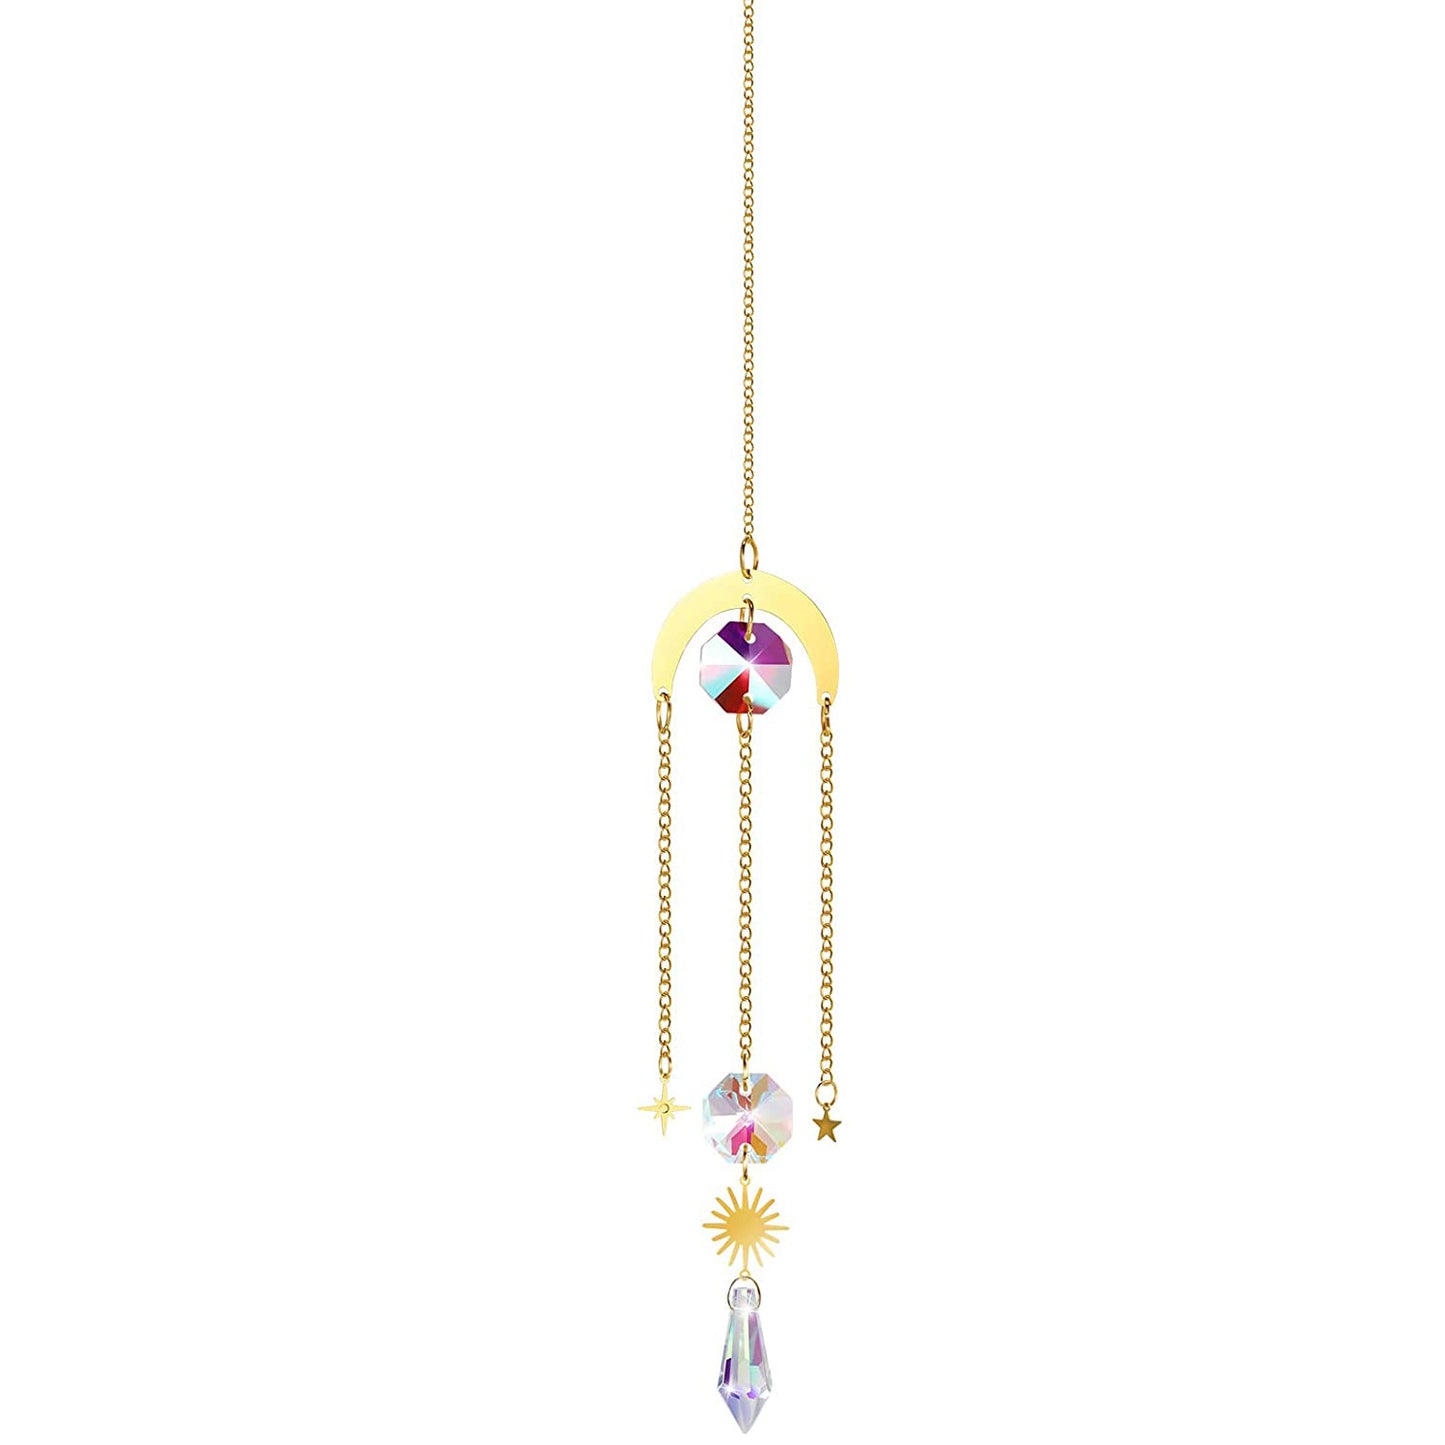 K9 Aura Crystal Hanger Crescent Moon Stars Sun Brass Color Twinkle Hanger - Long inch - China - NEW911